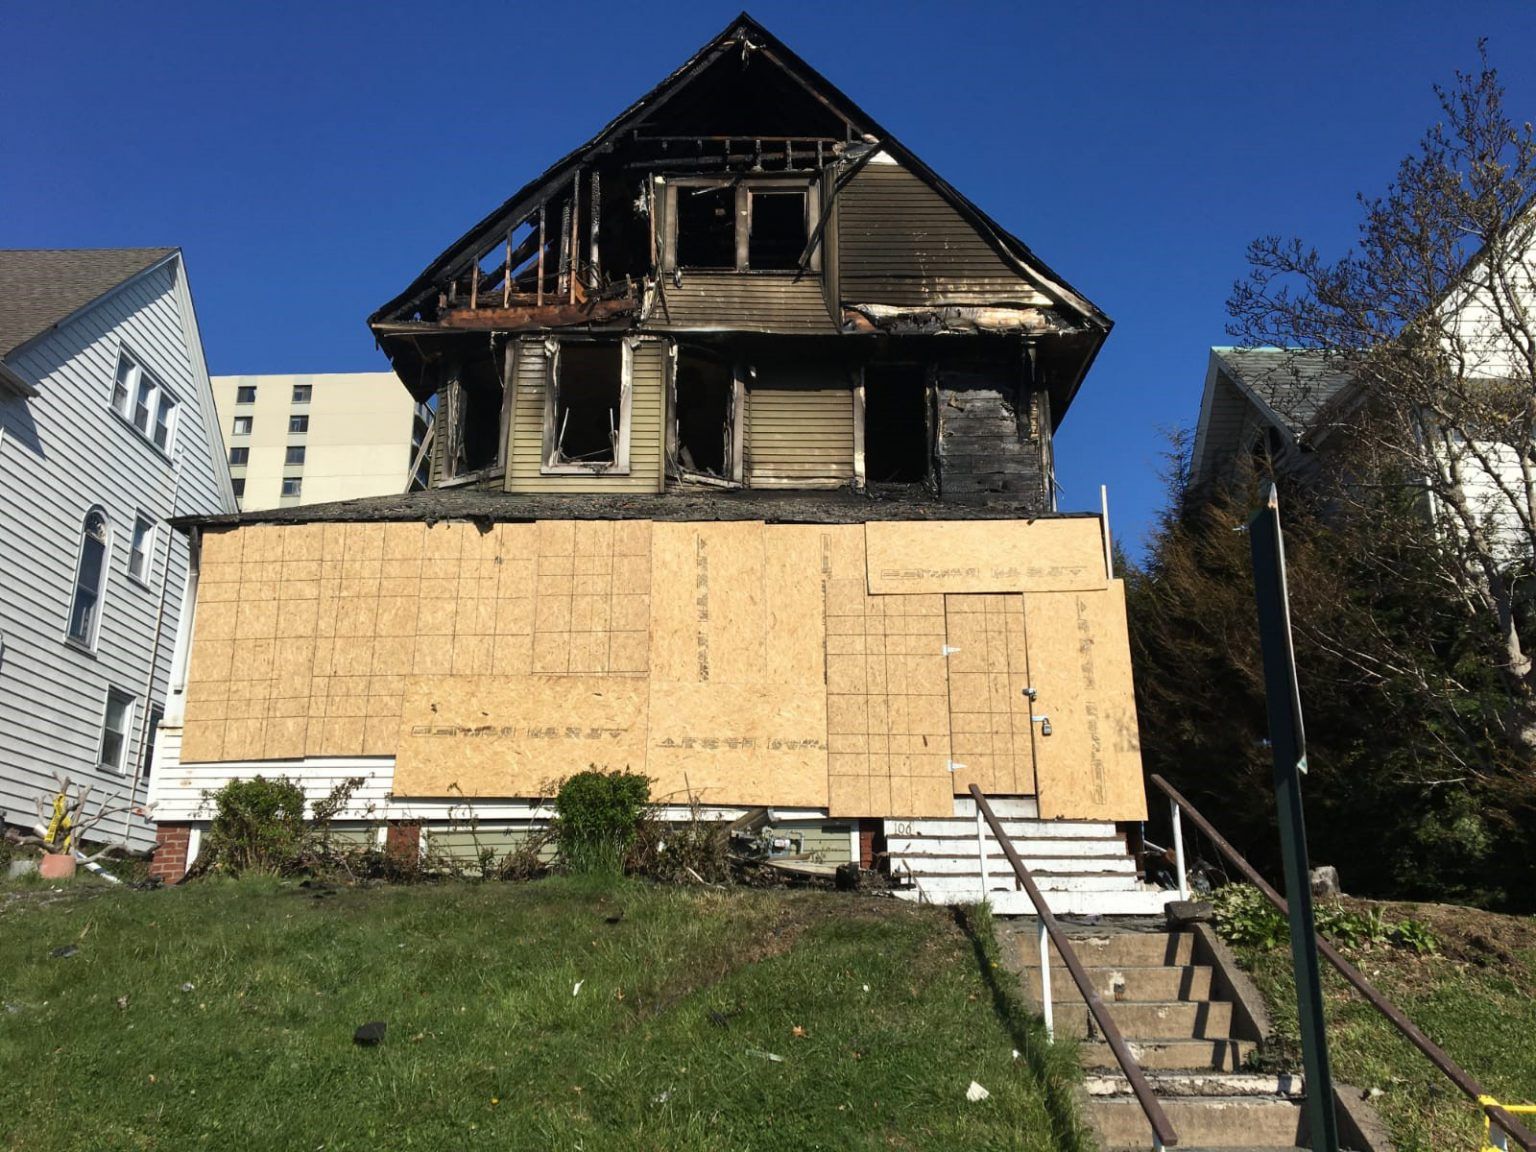 Burnt-house-Safer-Escape-Ladder-1-1536x1152-1.jpg